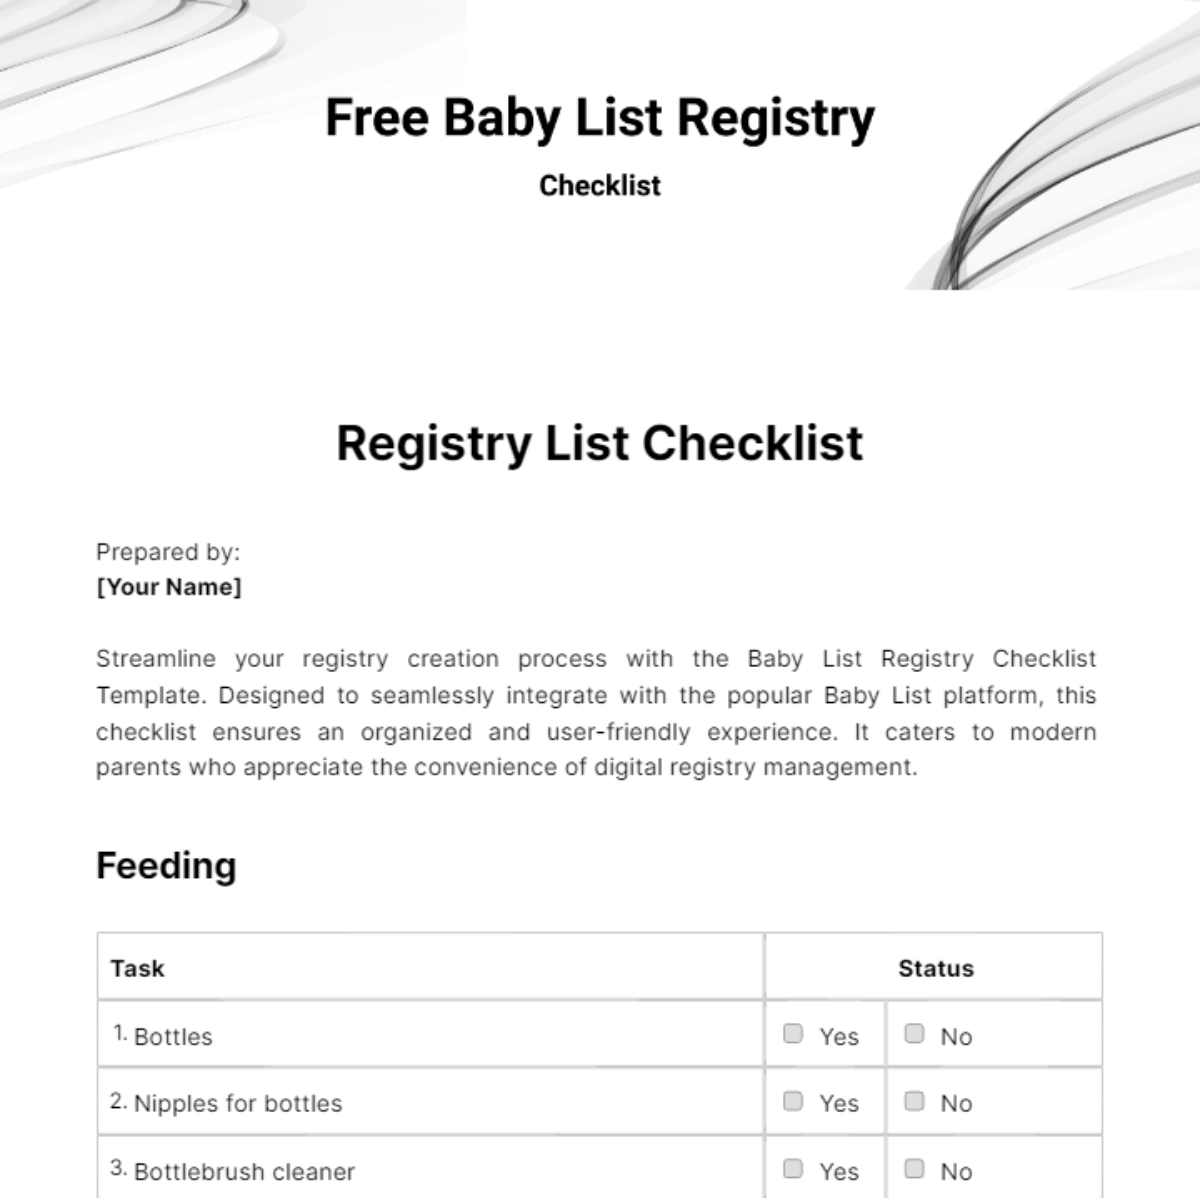 Free Baby List Registry Checklist Template